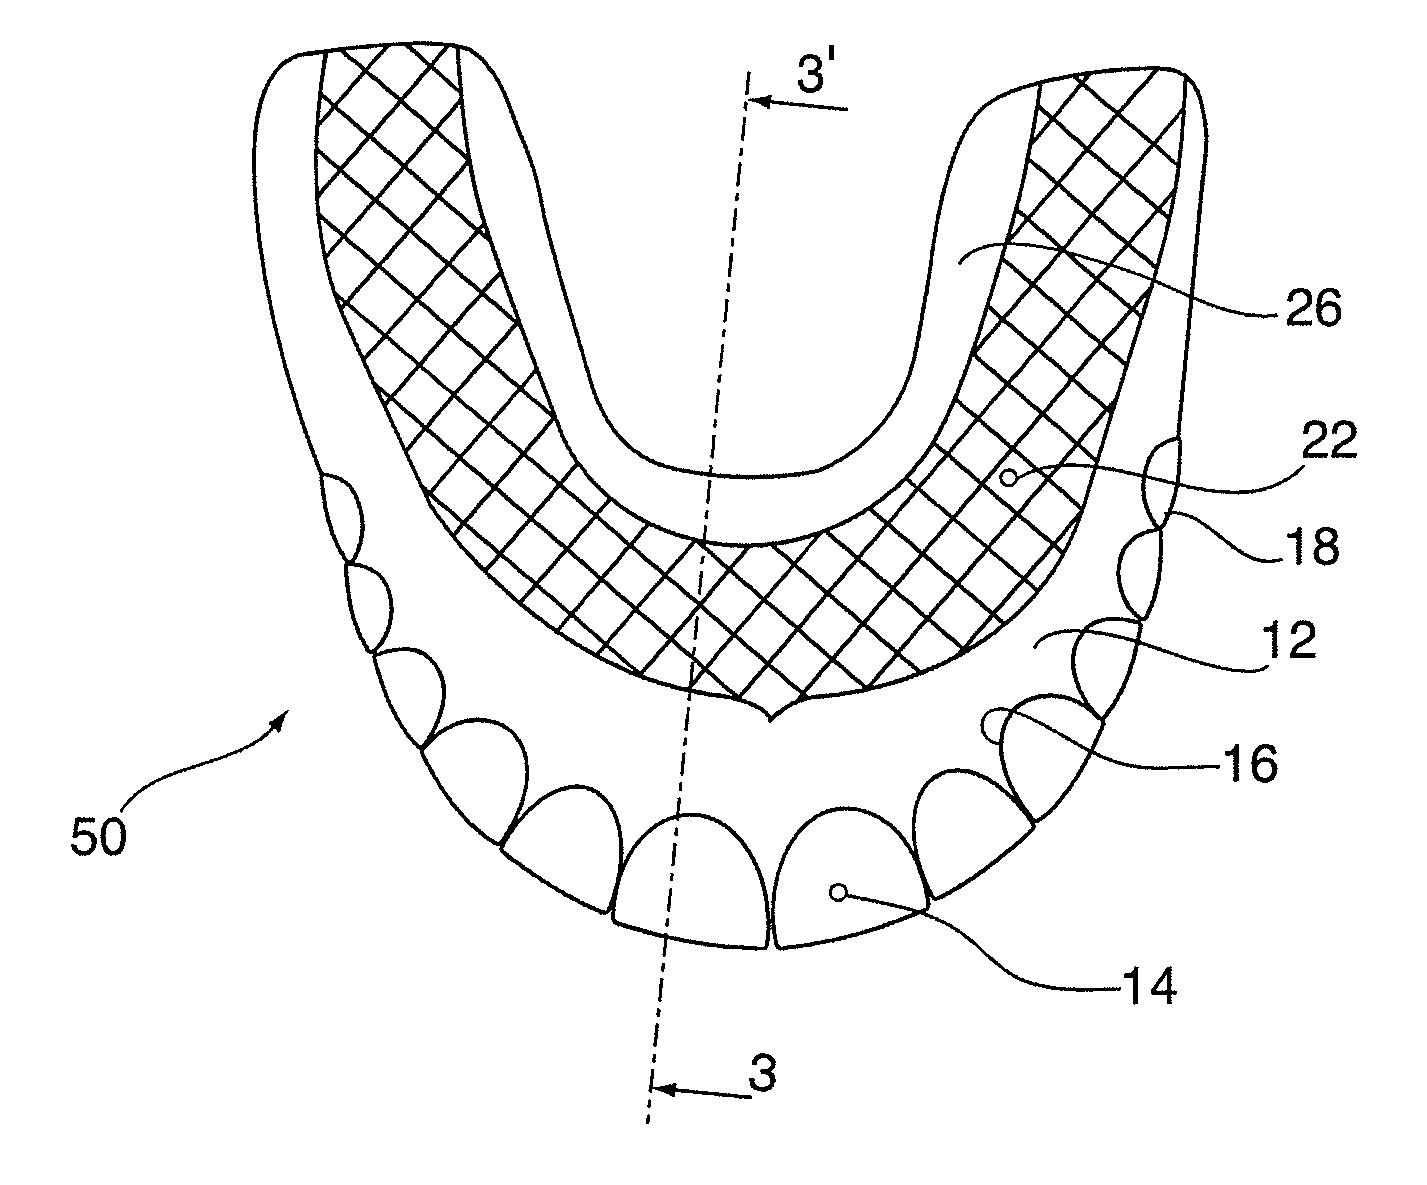 Palate-Free Upper Denture